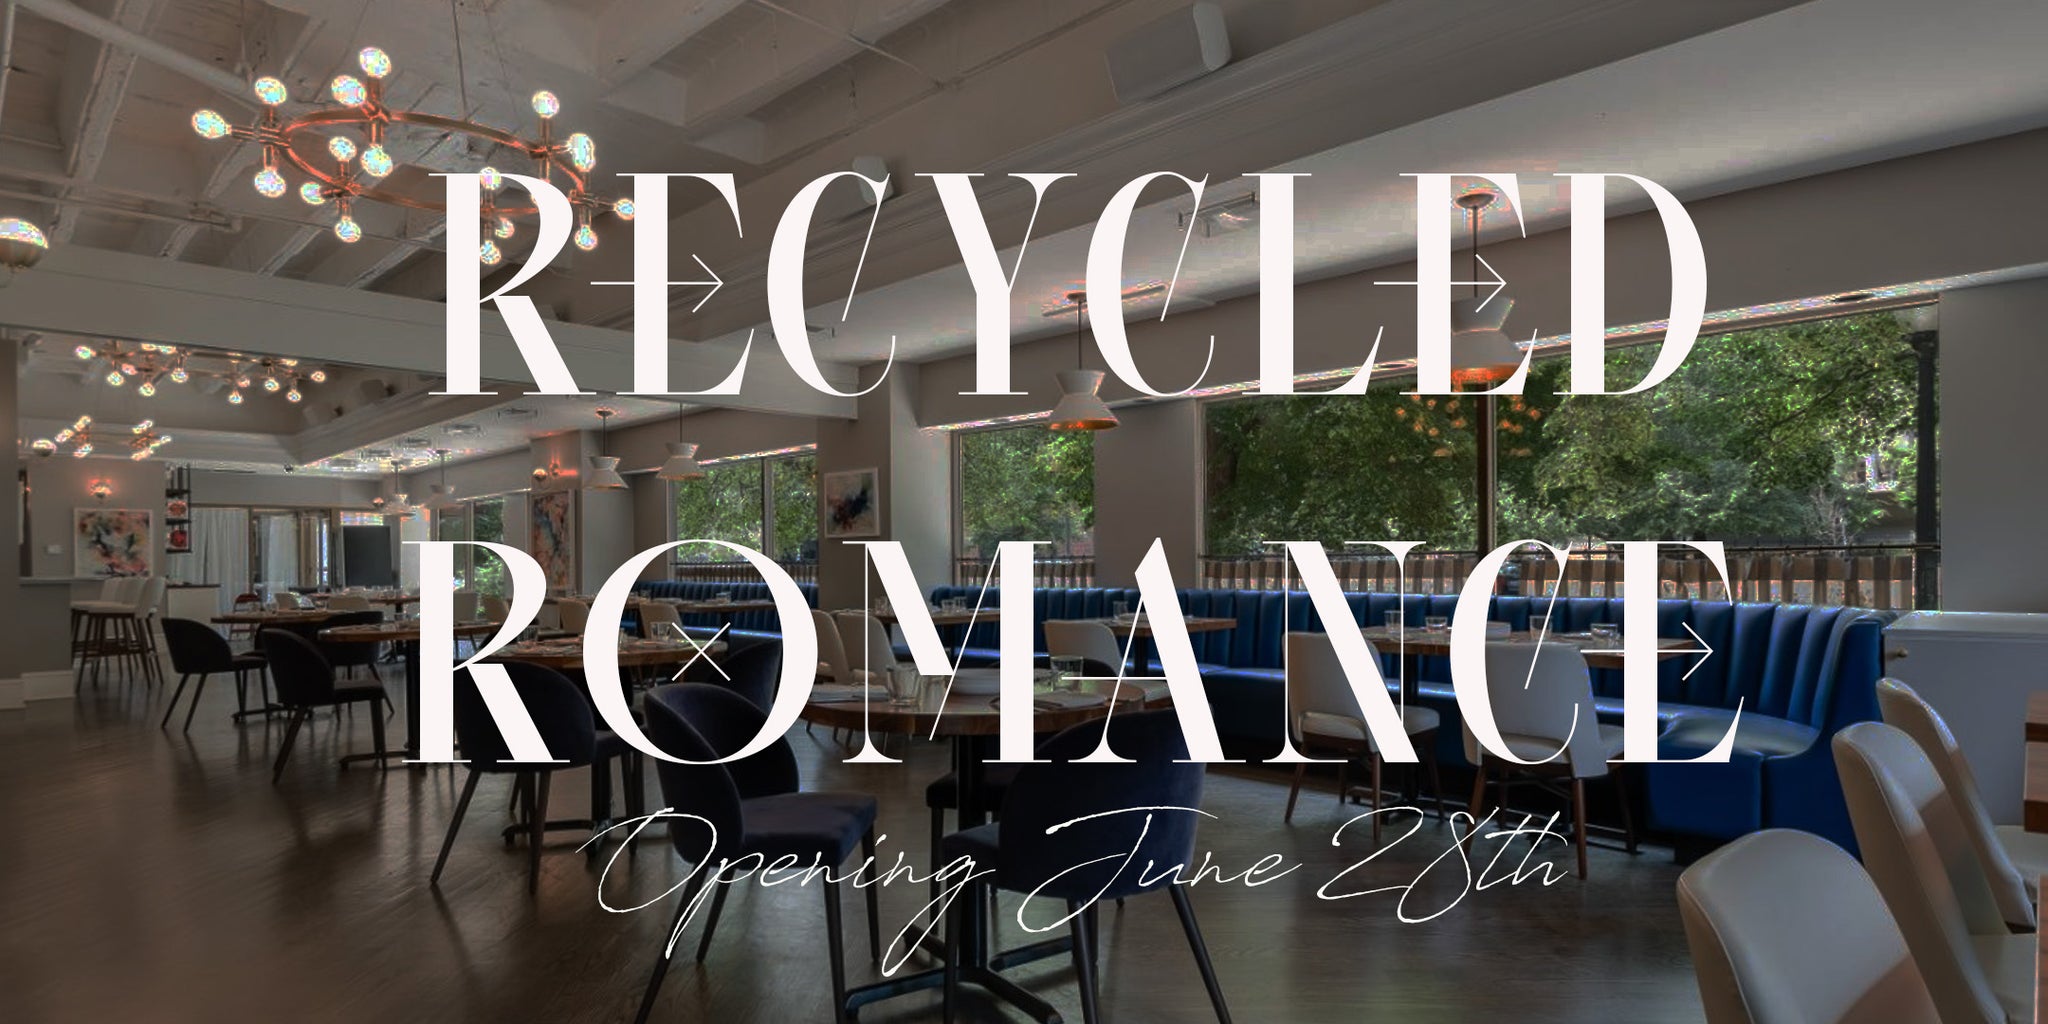 Recycled Romance - Mesa Urban Art show